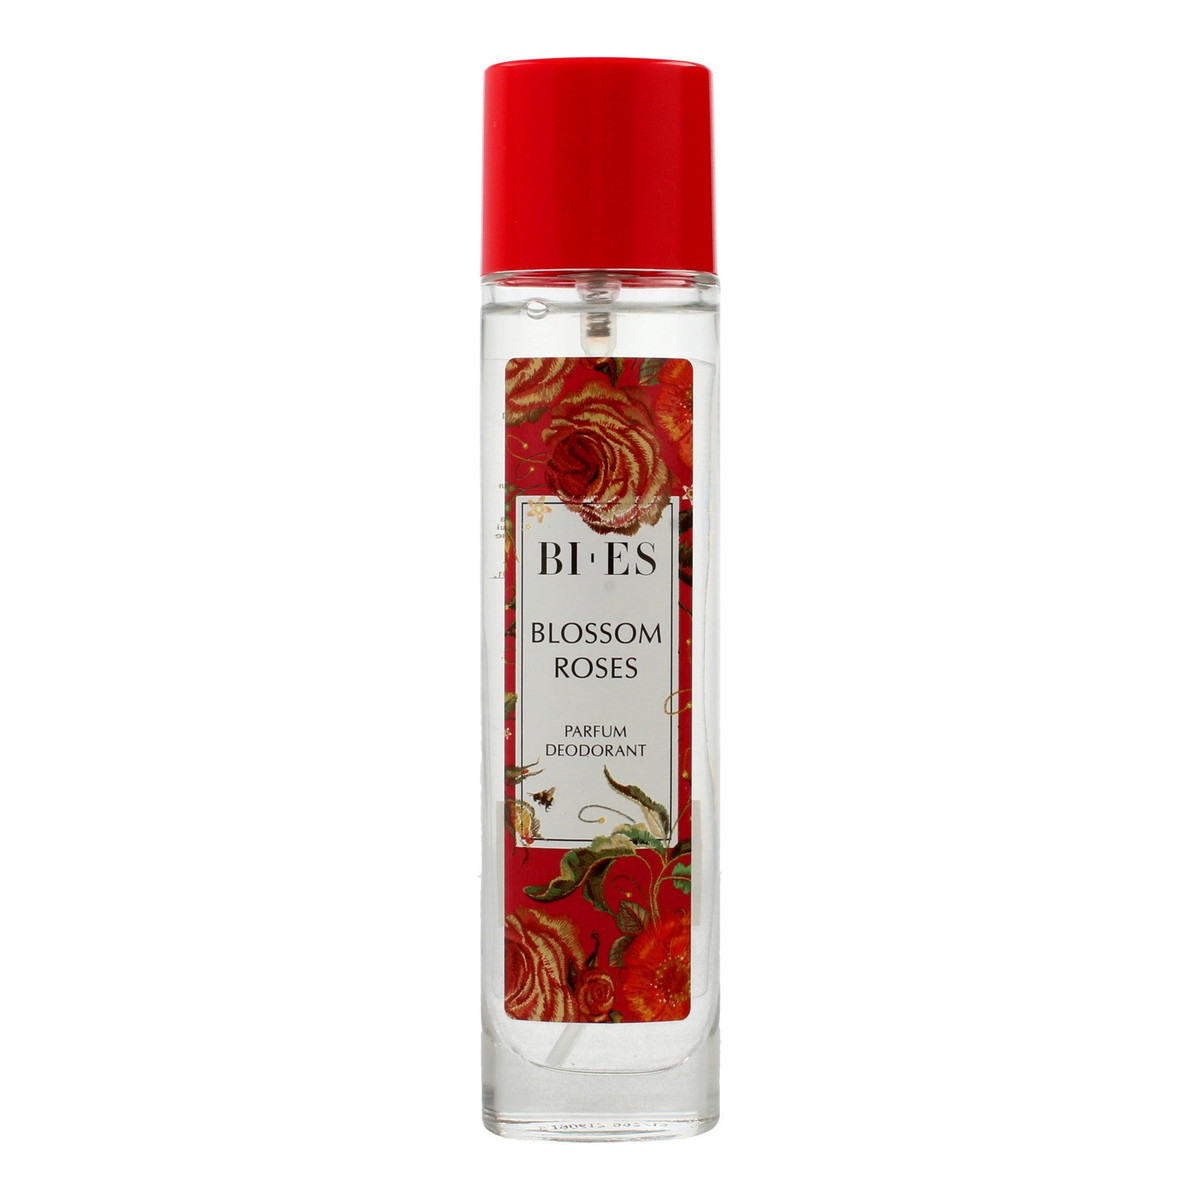 Bi-es Blossom Roses dezodorant perfumowany atomizer 75ml